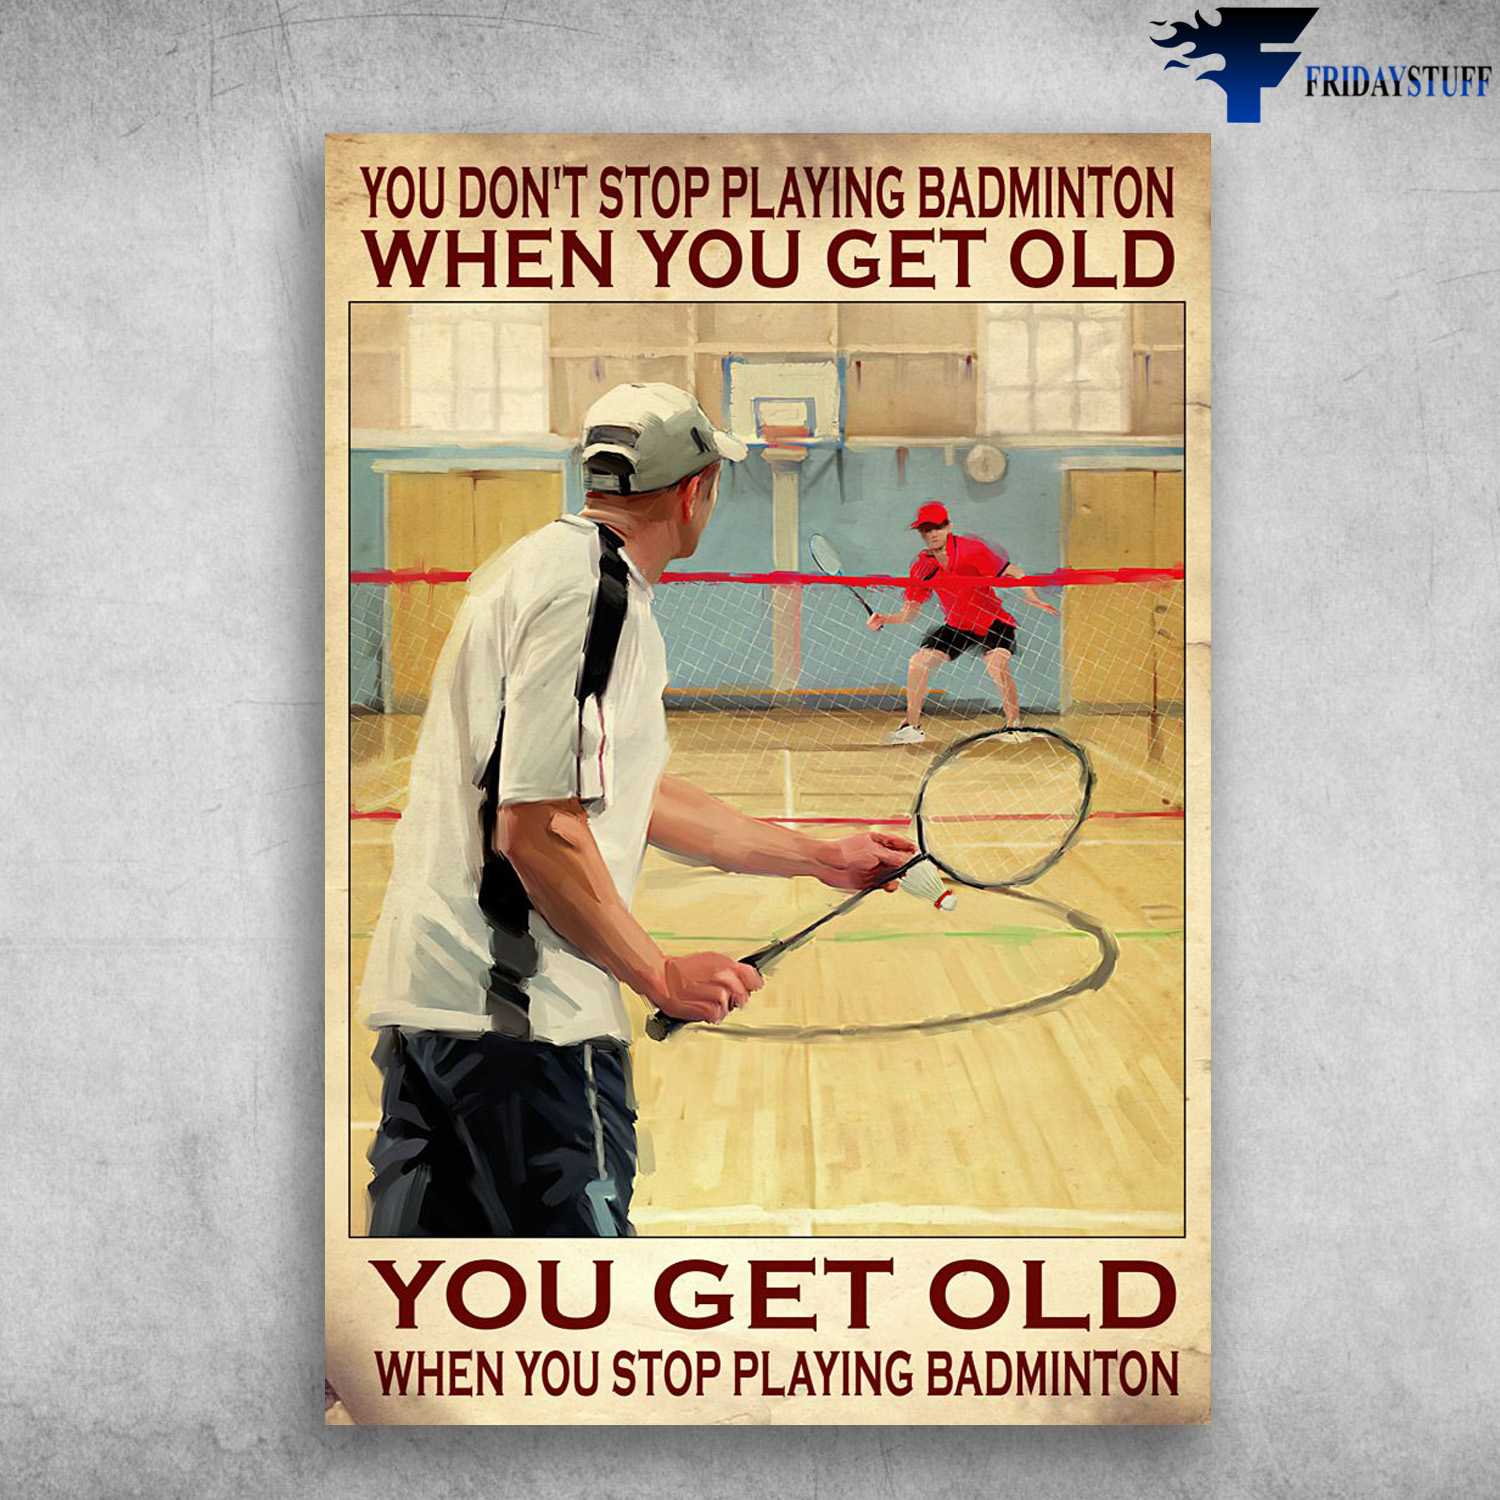 Old Man Plays Badminton, Badminton Player, You Don't Playing Badminton When You Get Old, You Get Old When You Stop Playing Badminton